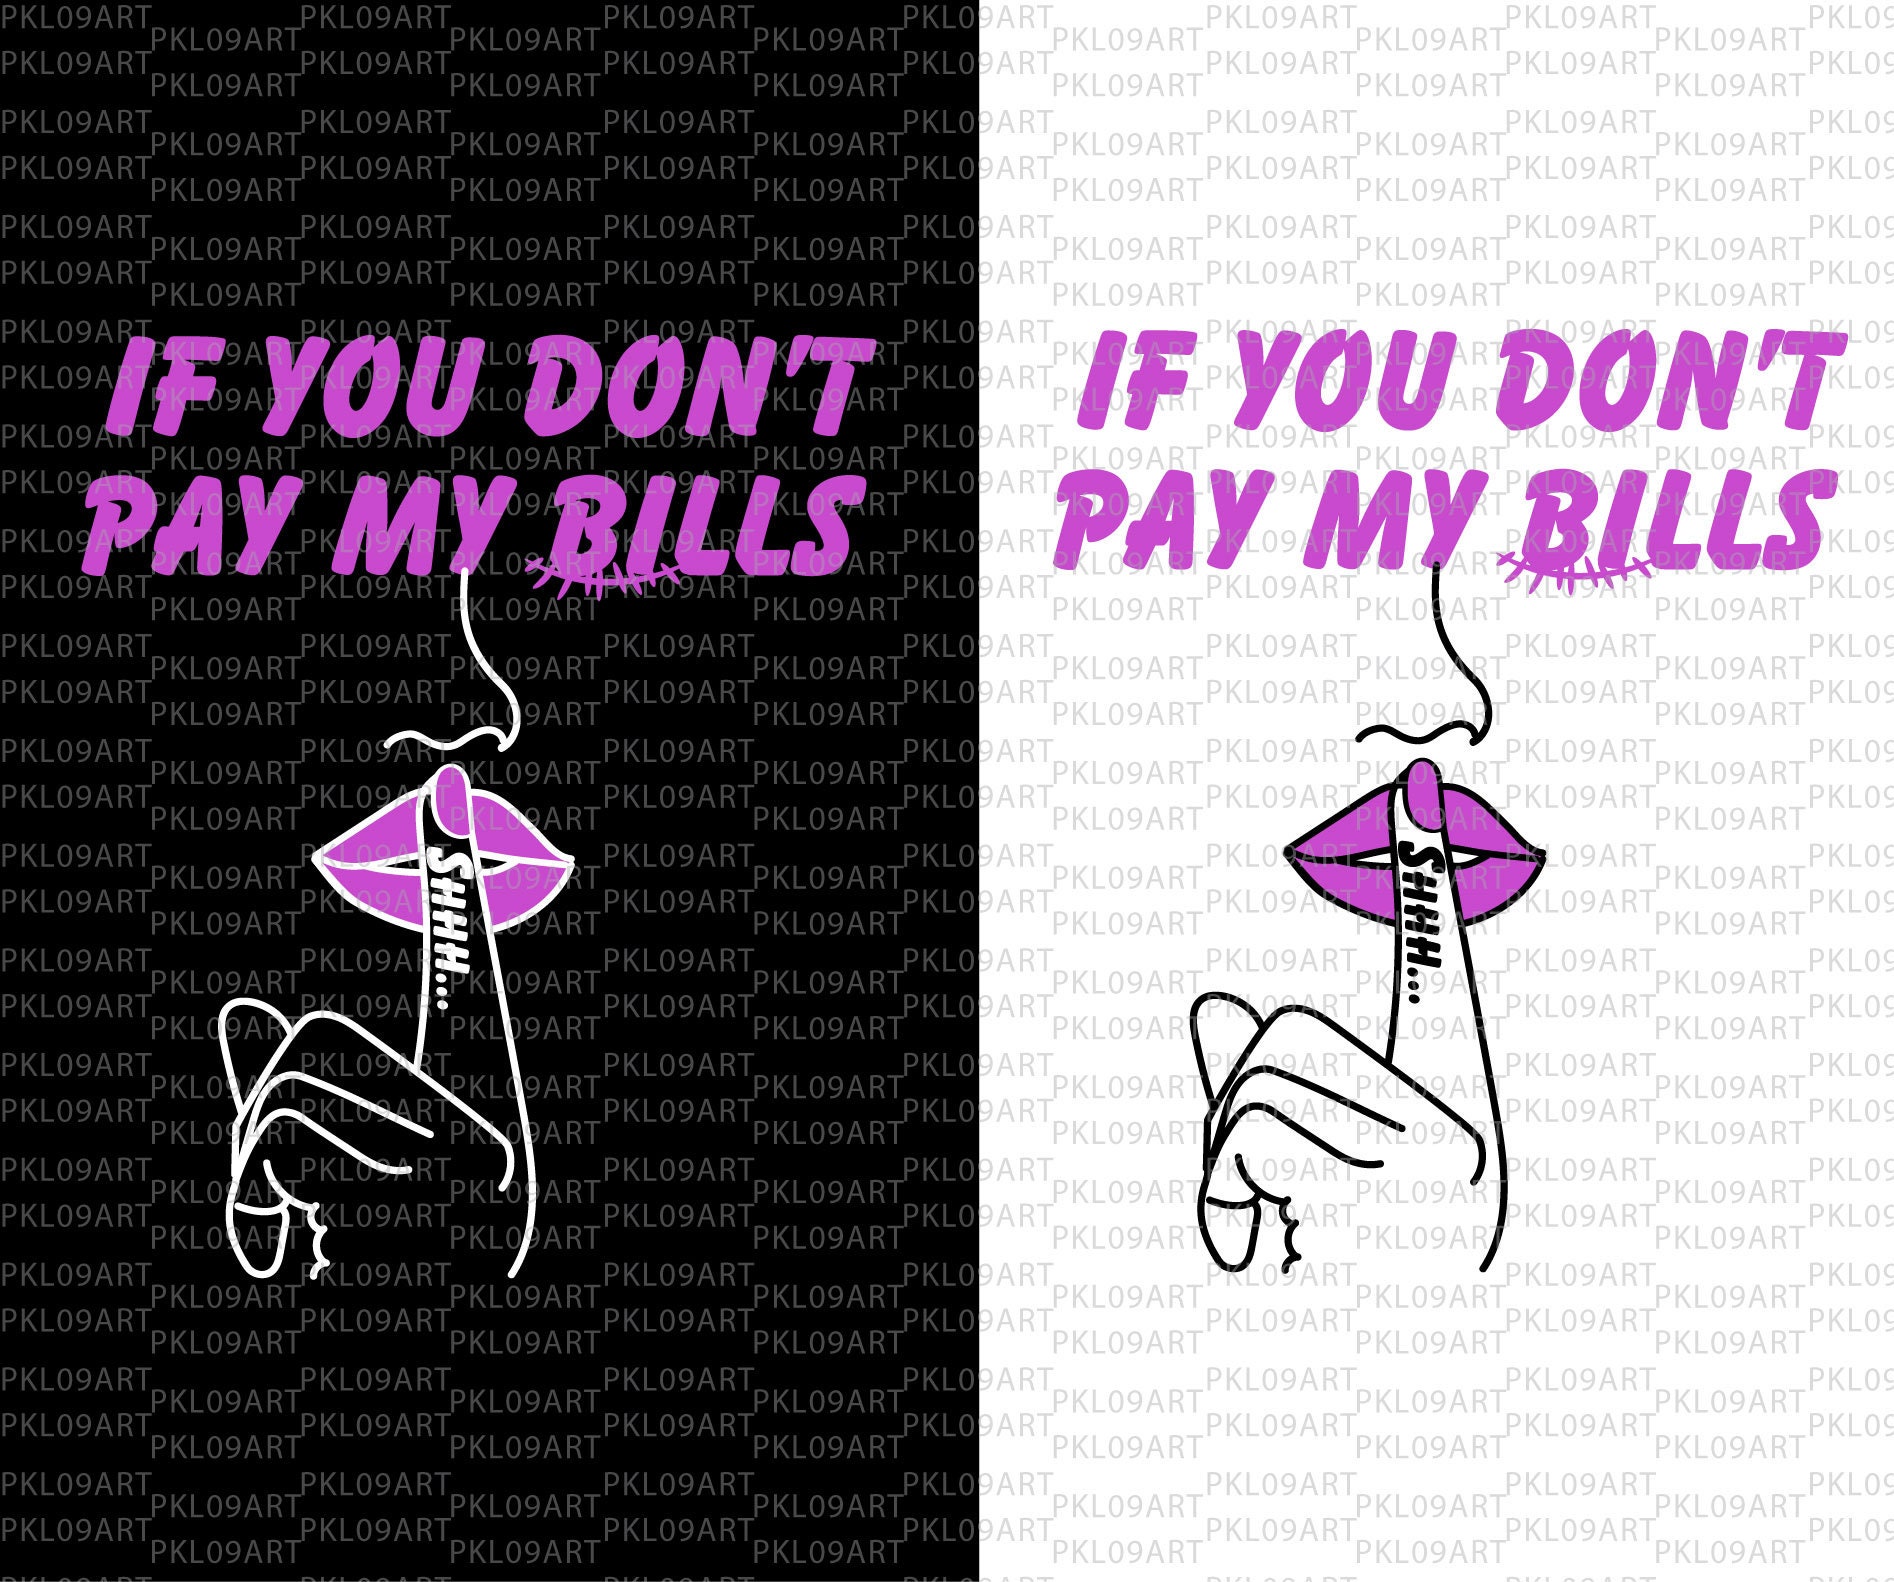 pay my bills on line